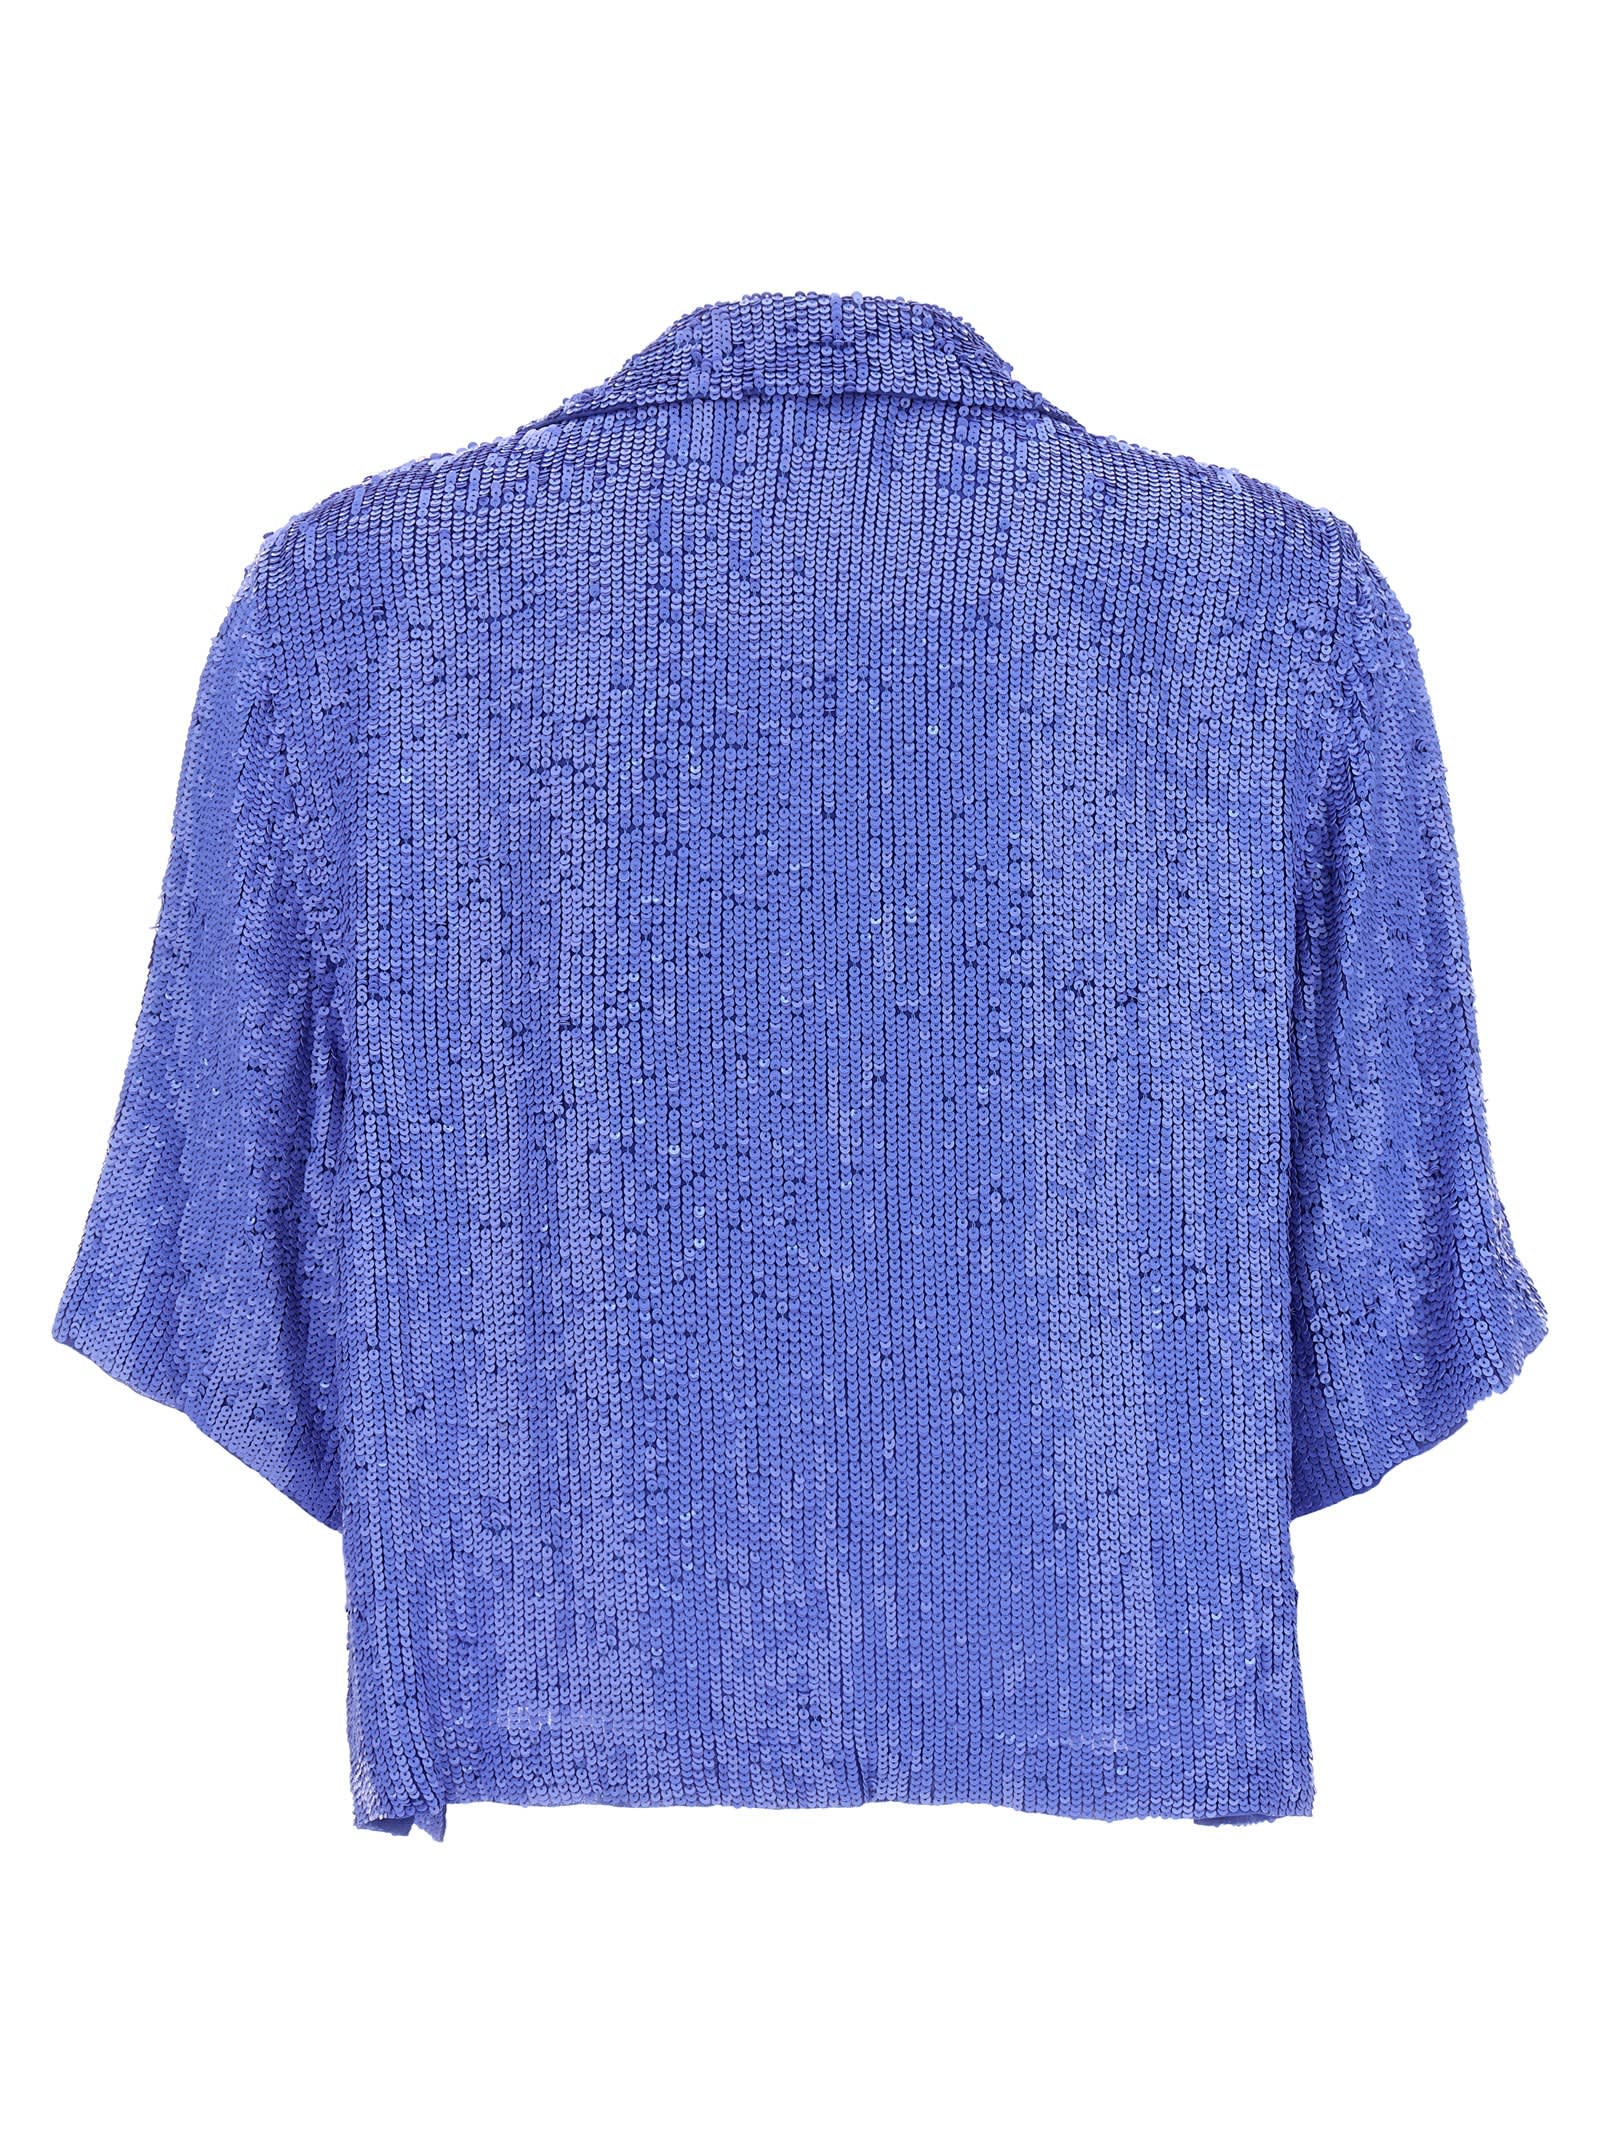 Shop P.a.r.o.s.h Sequin Shirt In Purple